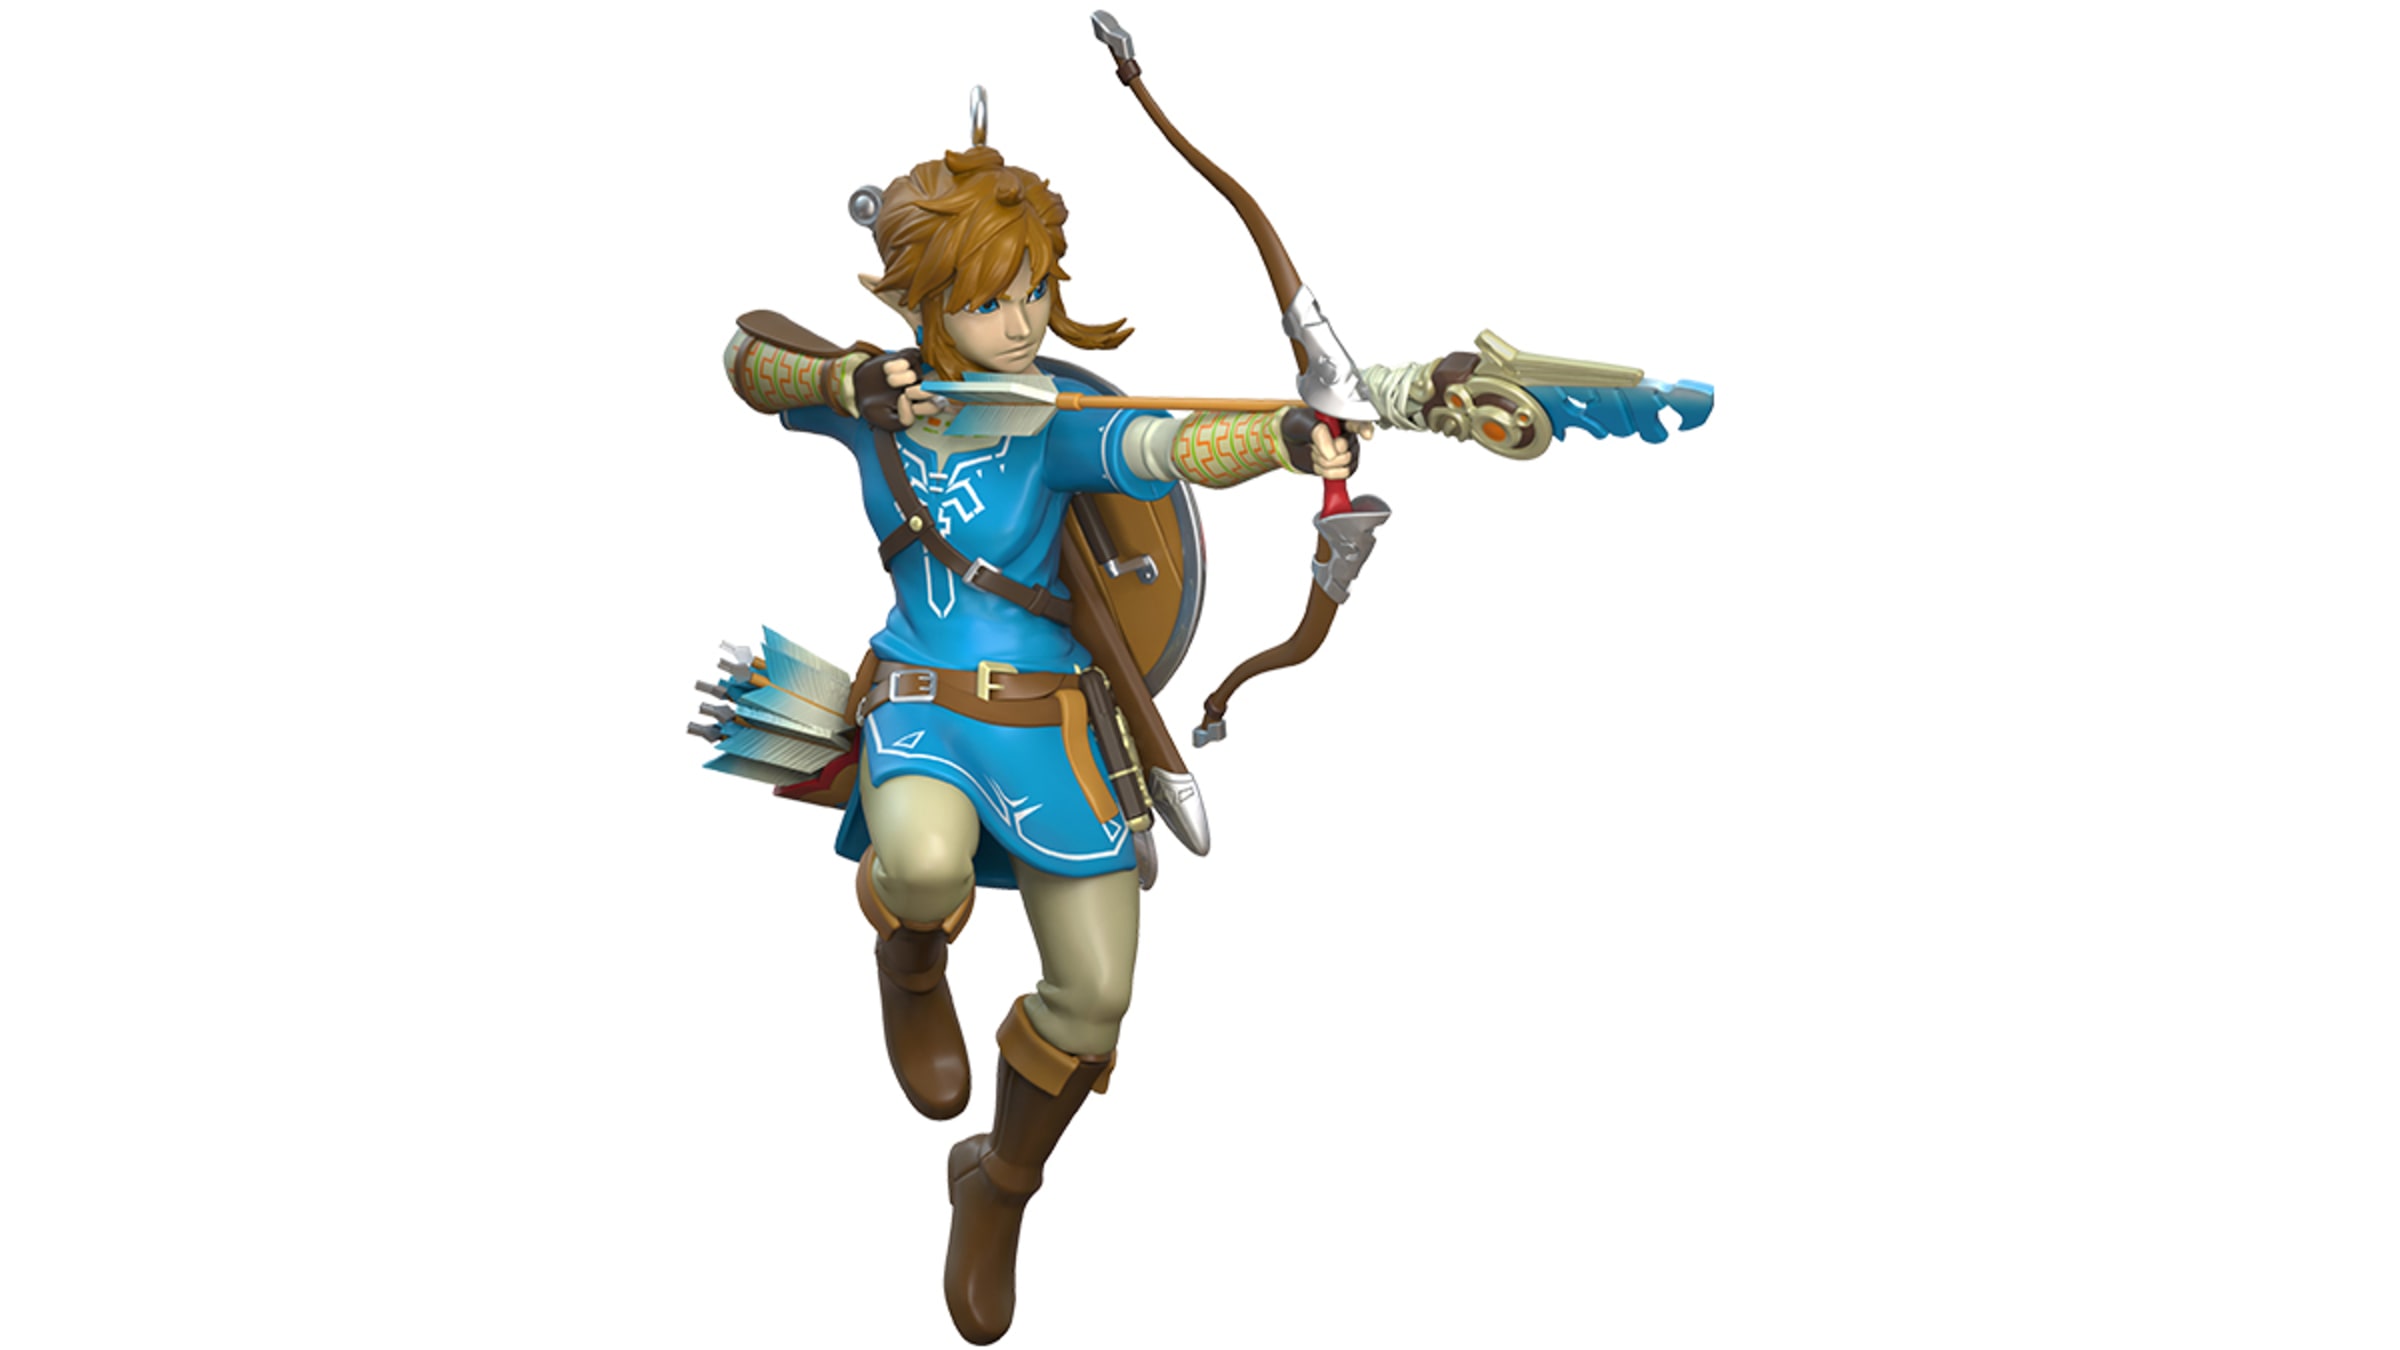 Nintendo The Legend of Zelda Link Ornament